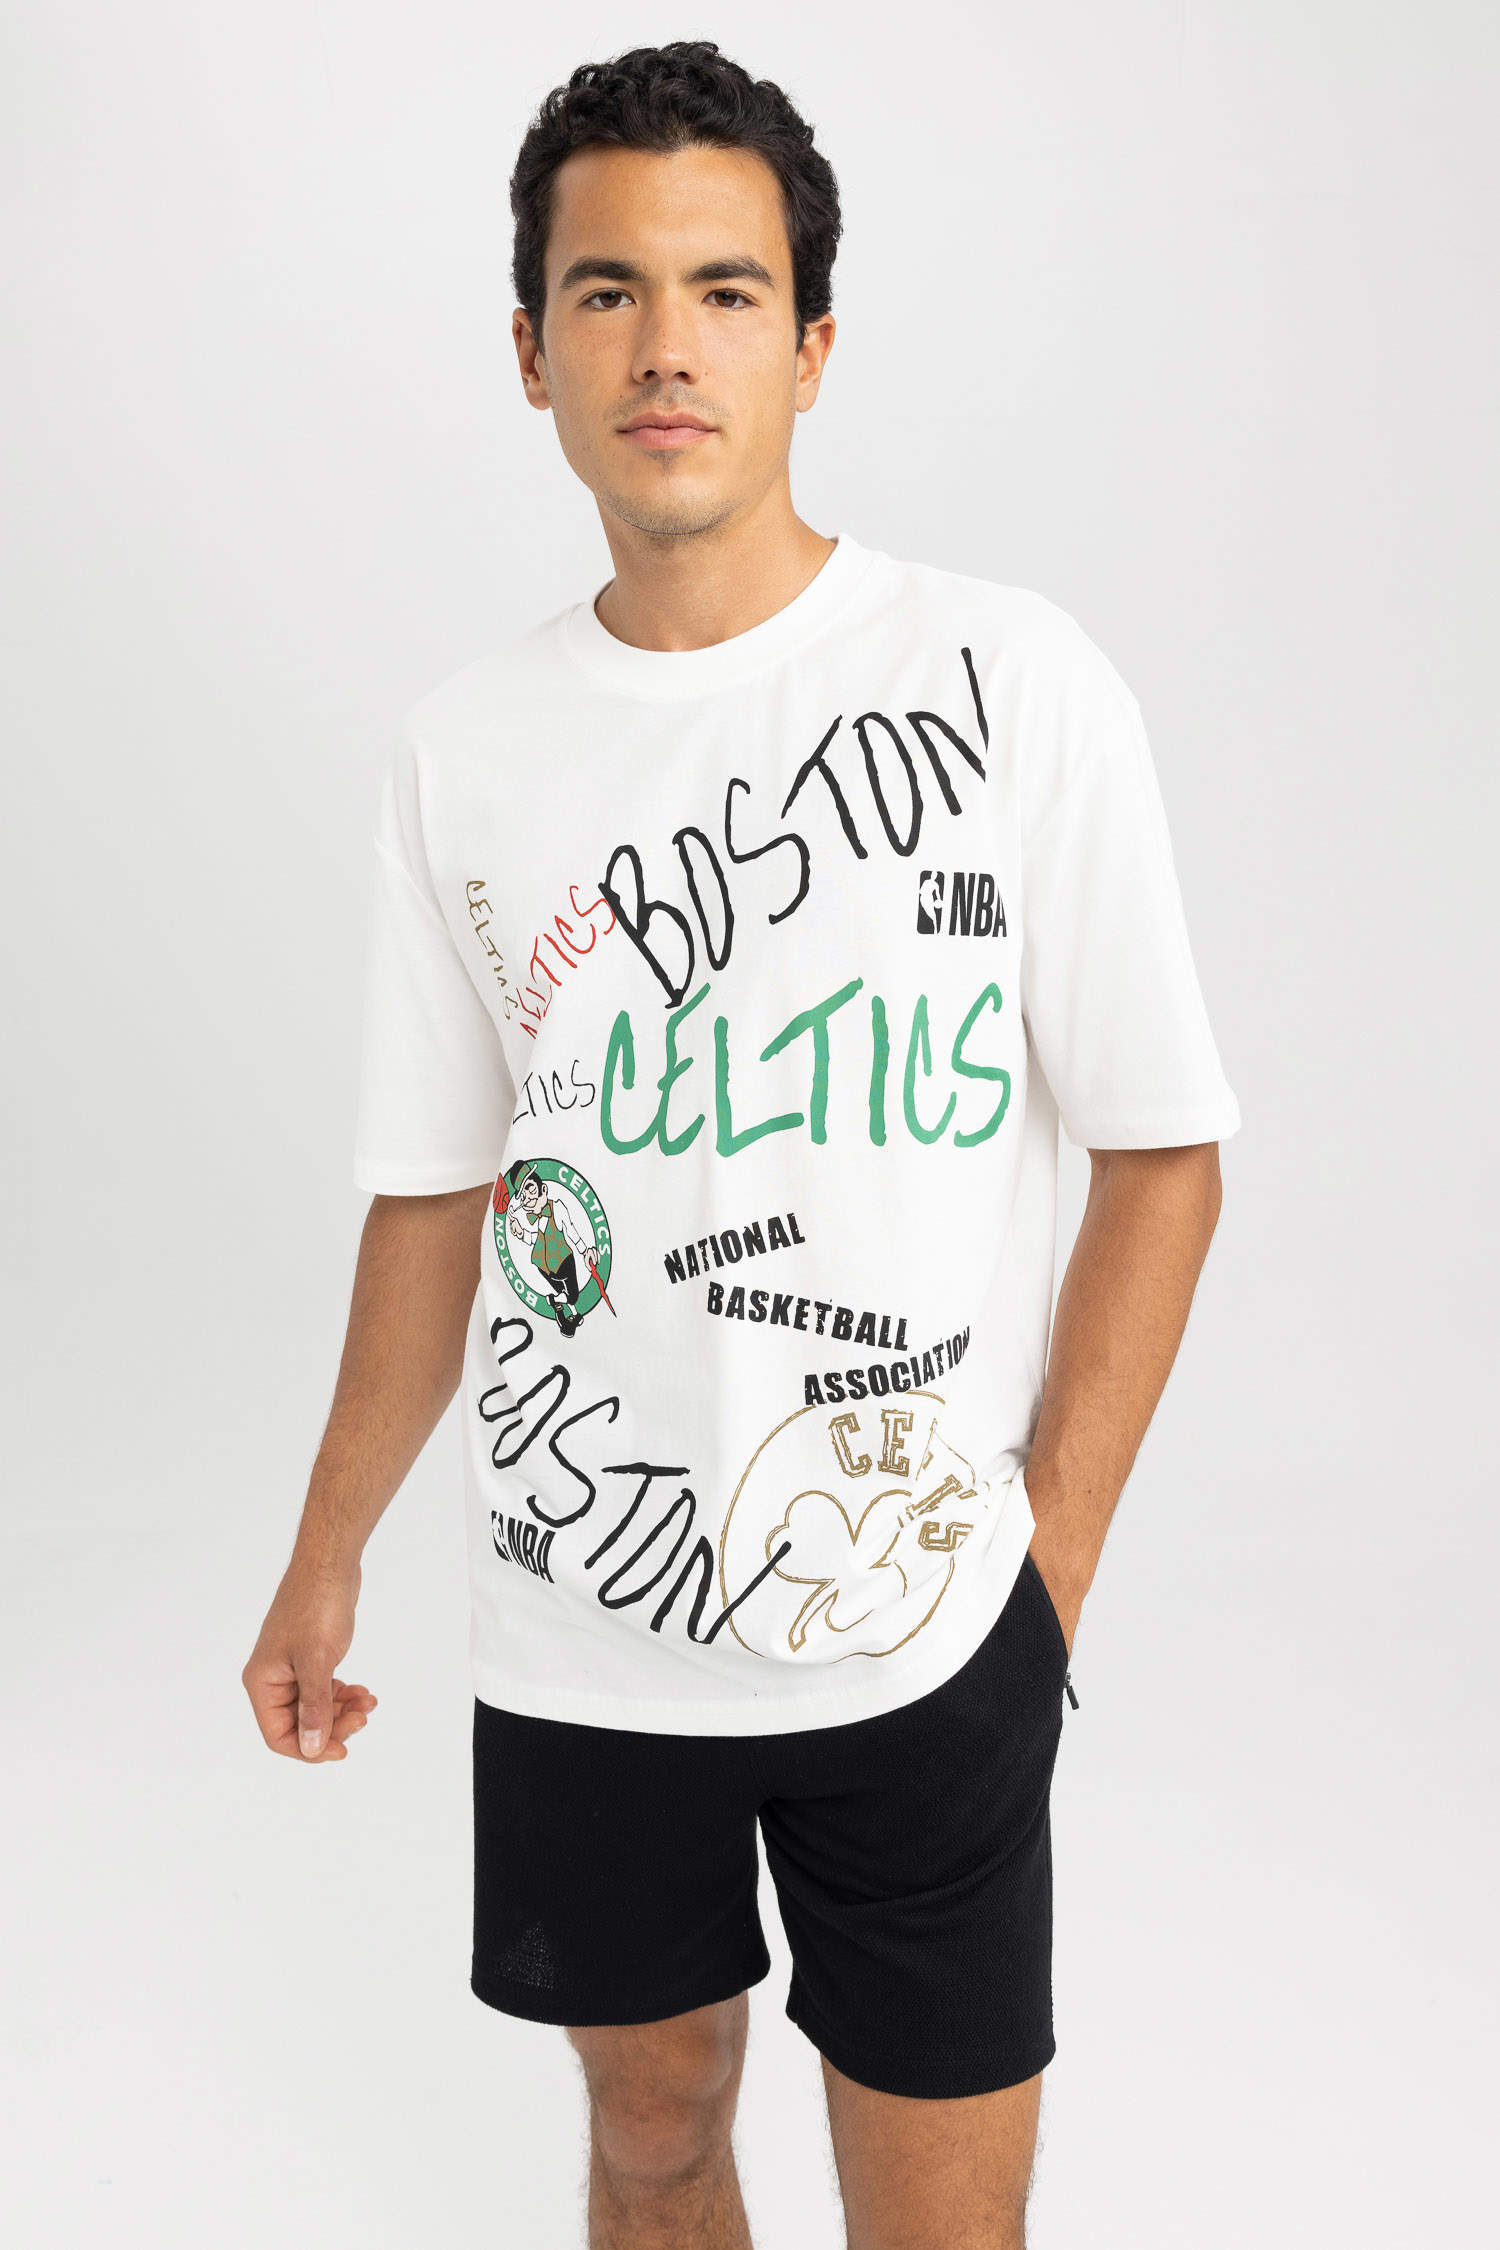 DeFactoFit NBA Boston Celtics Licensed Oversize Fit Crew Neck T-Shirt